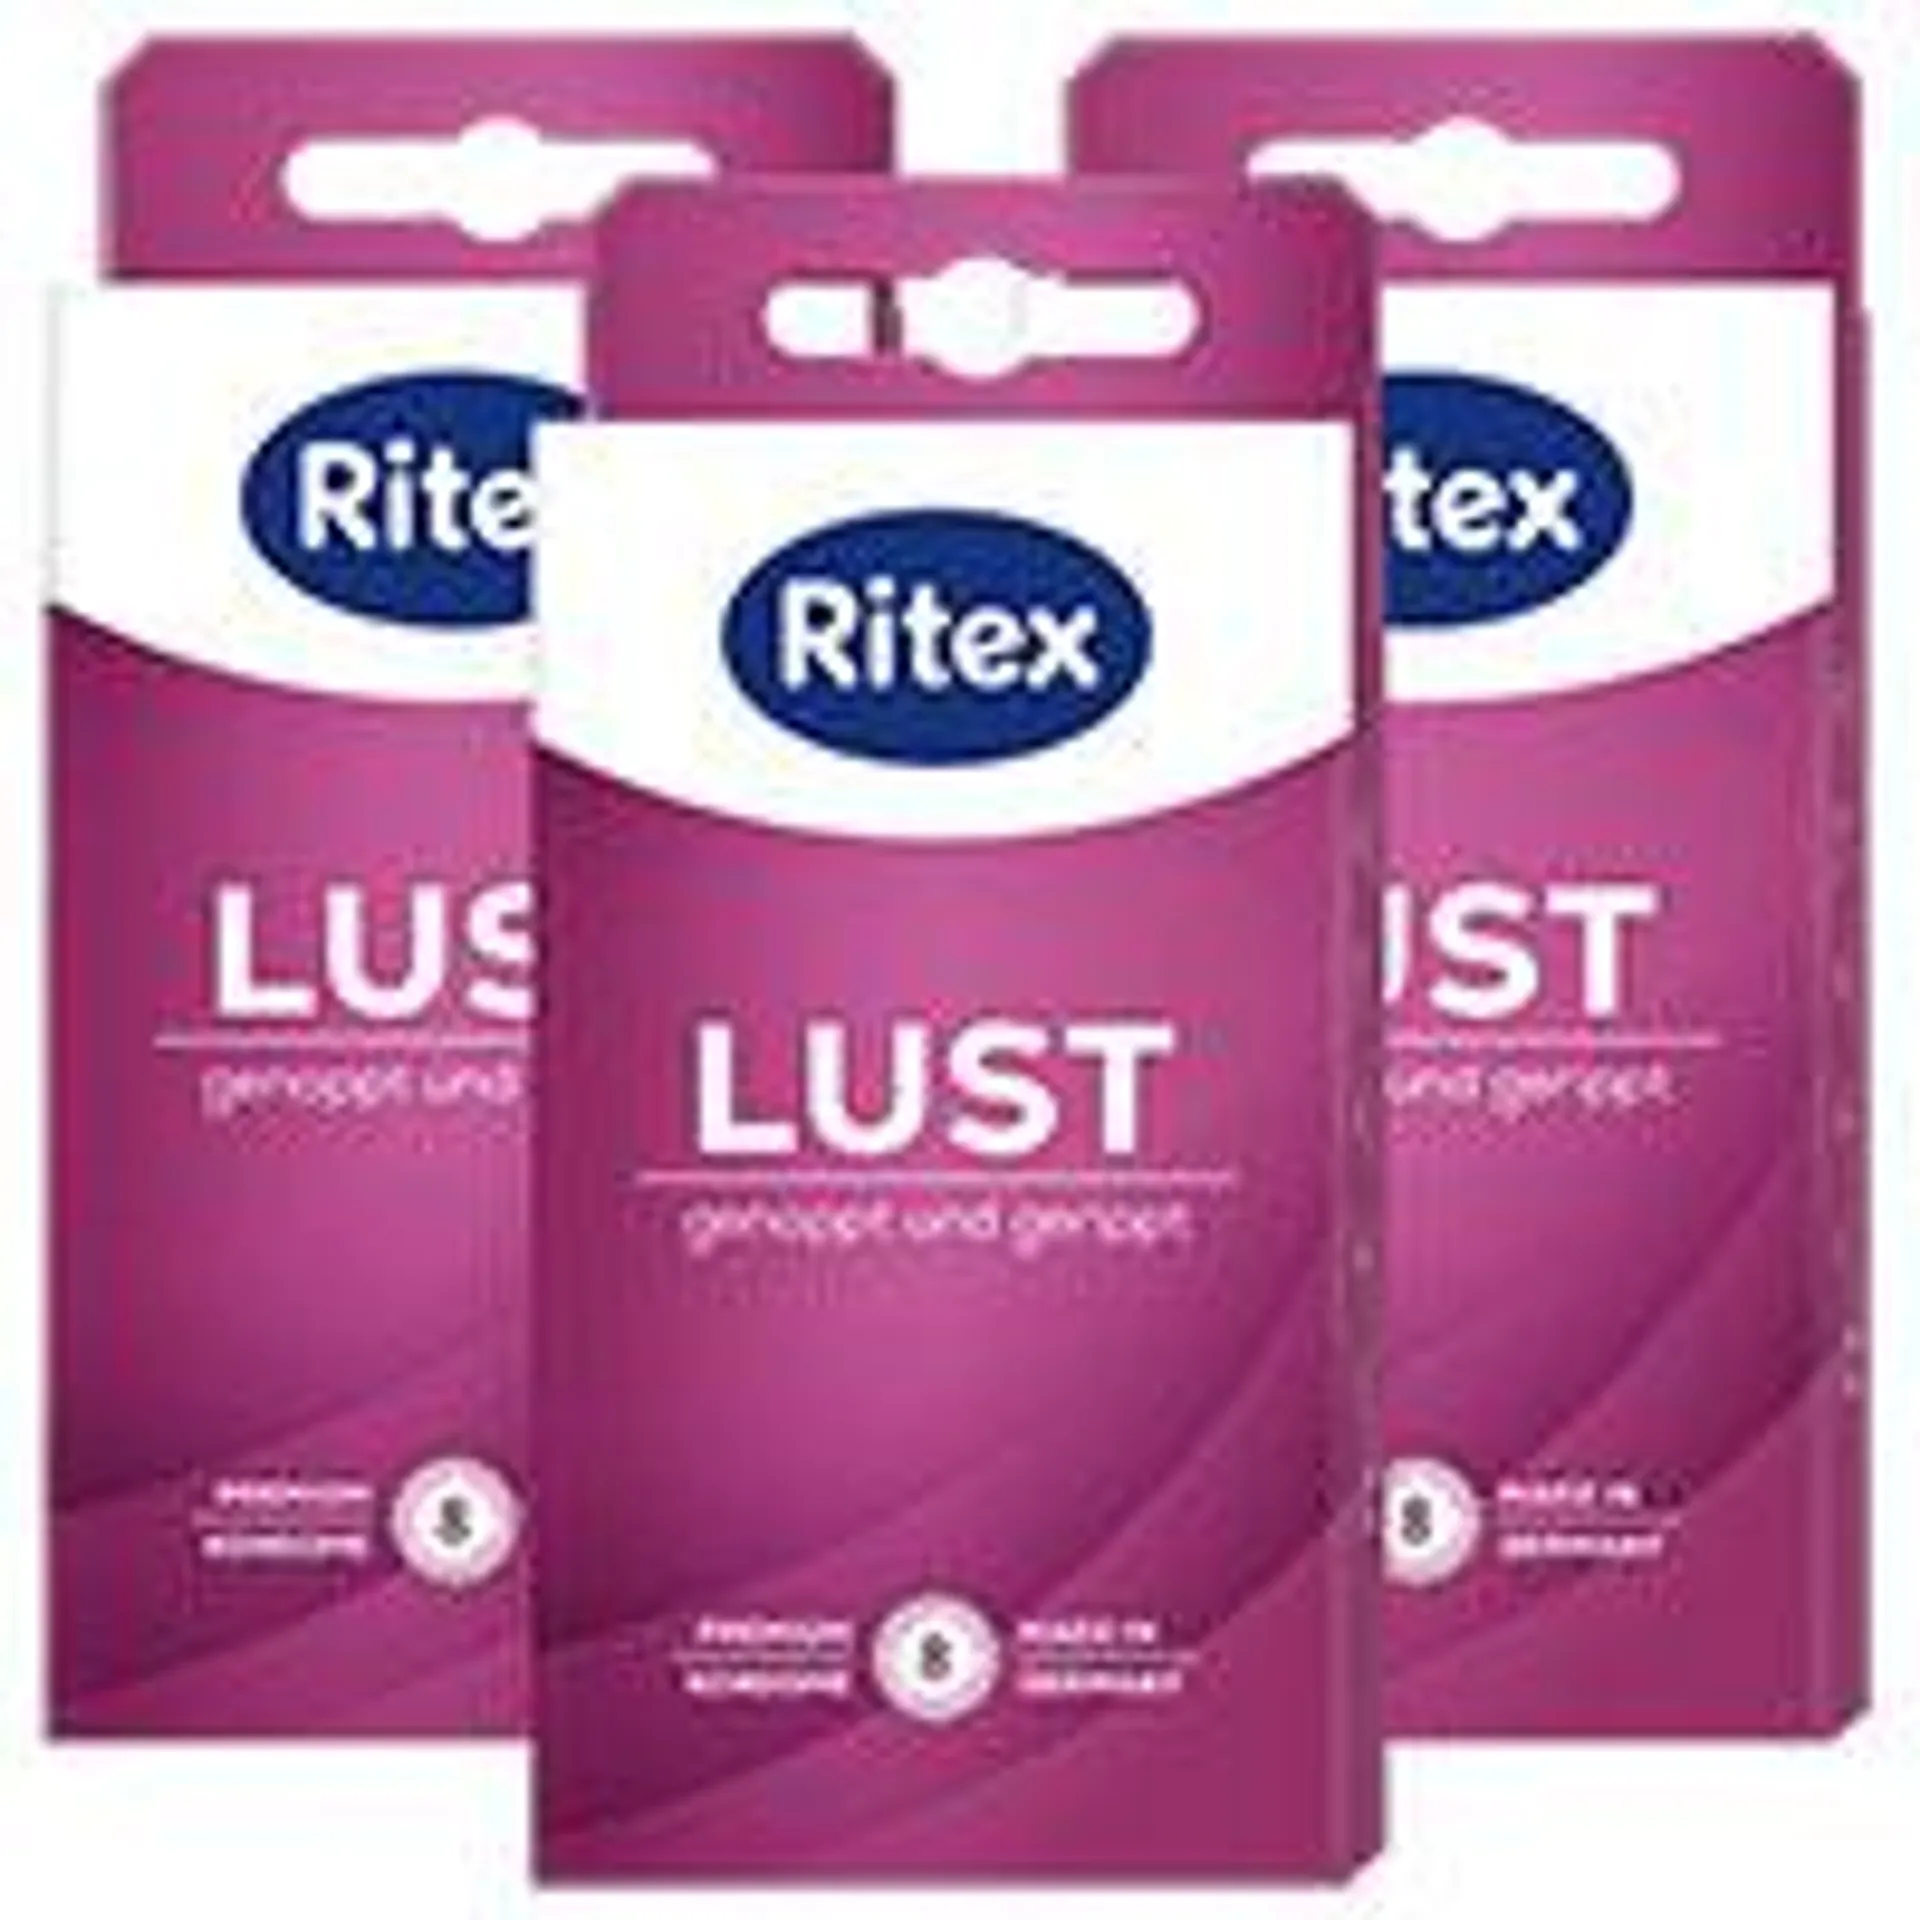 RITEX Lust Kondome Sparset 24 St Kondome